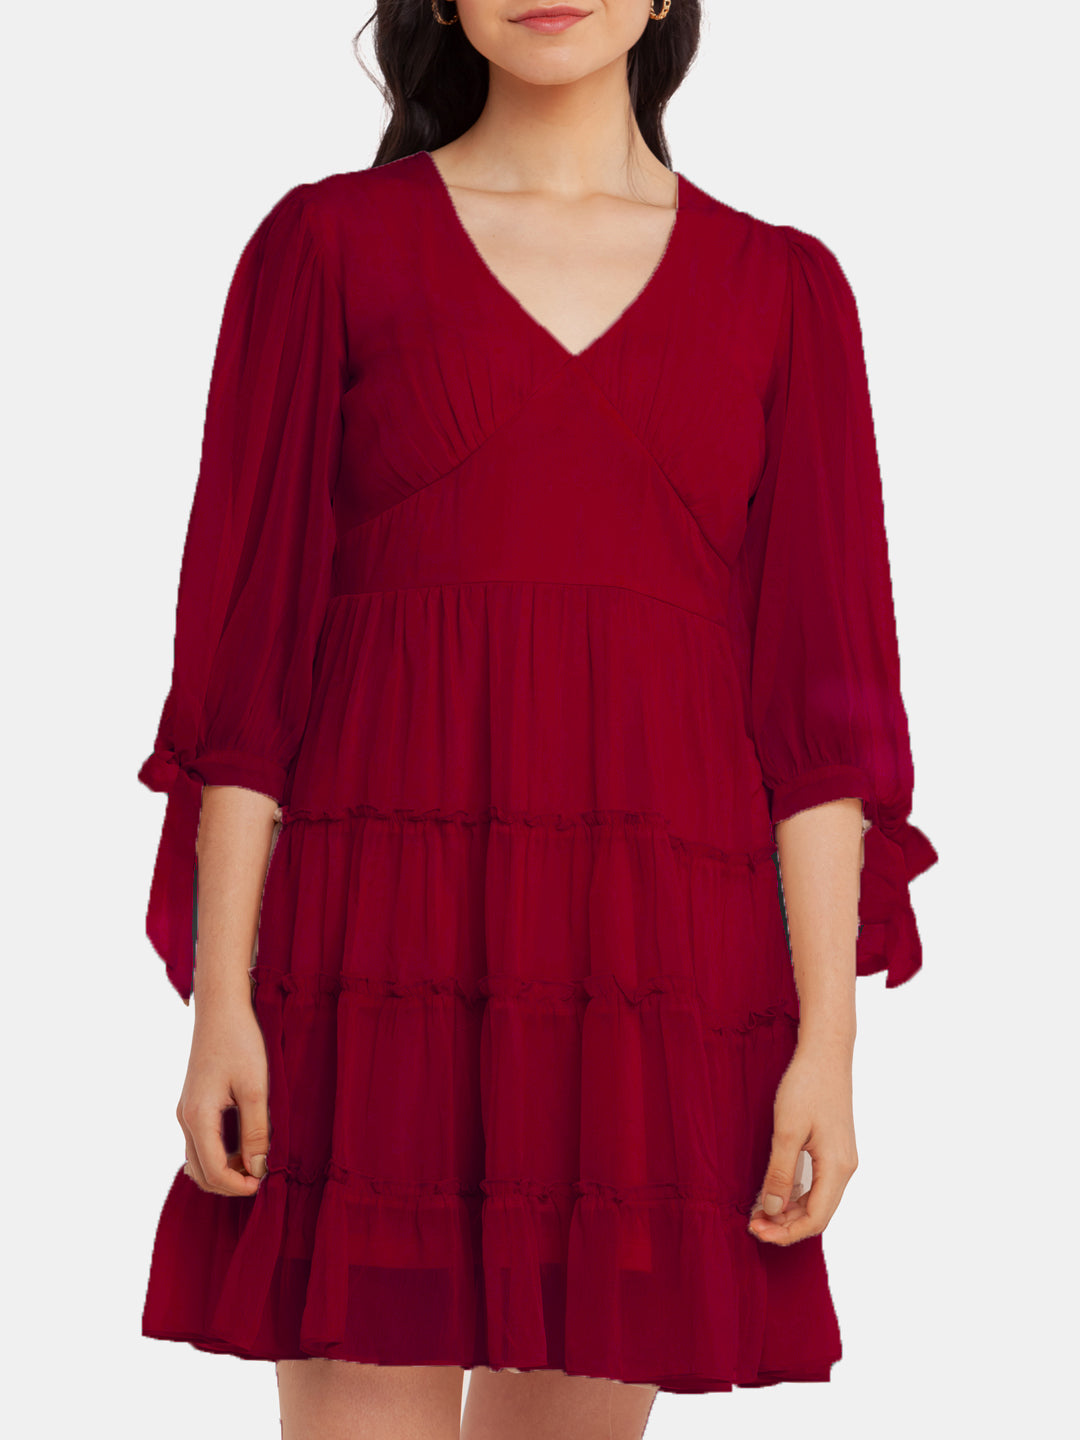 Crimson-Red-Solid-Fit-and-Flare-Short-Dress-VD02165_227-CrimsonRed-6